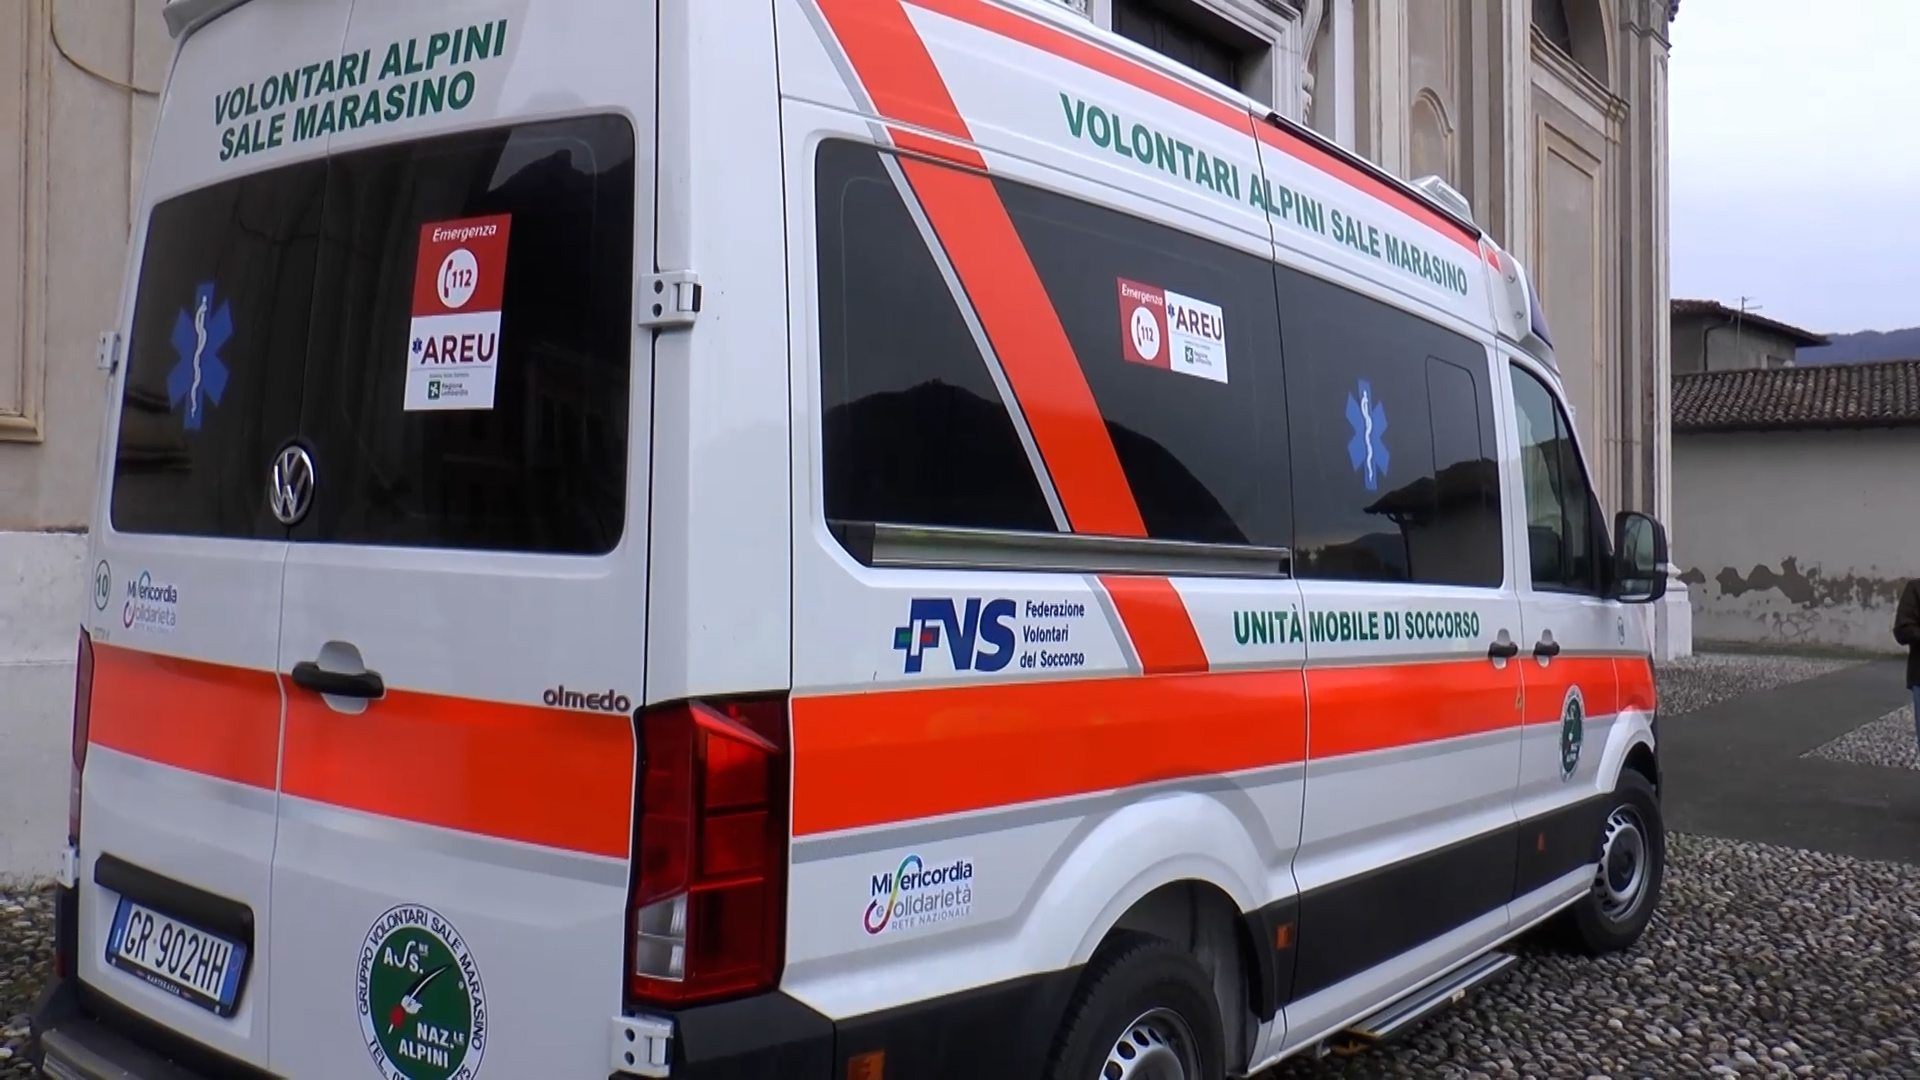 Sale Marasino, nuova ambulanza e nuovi volontari